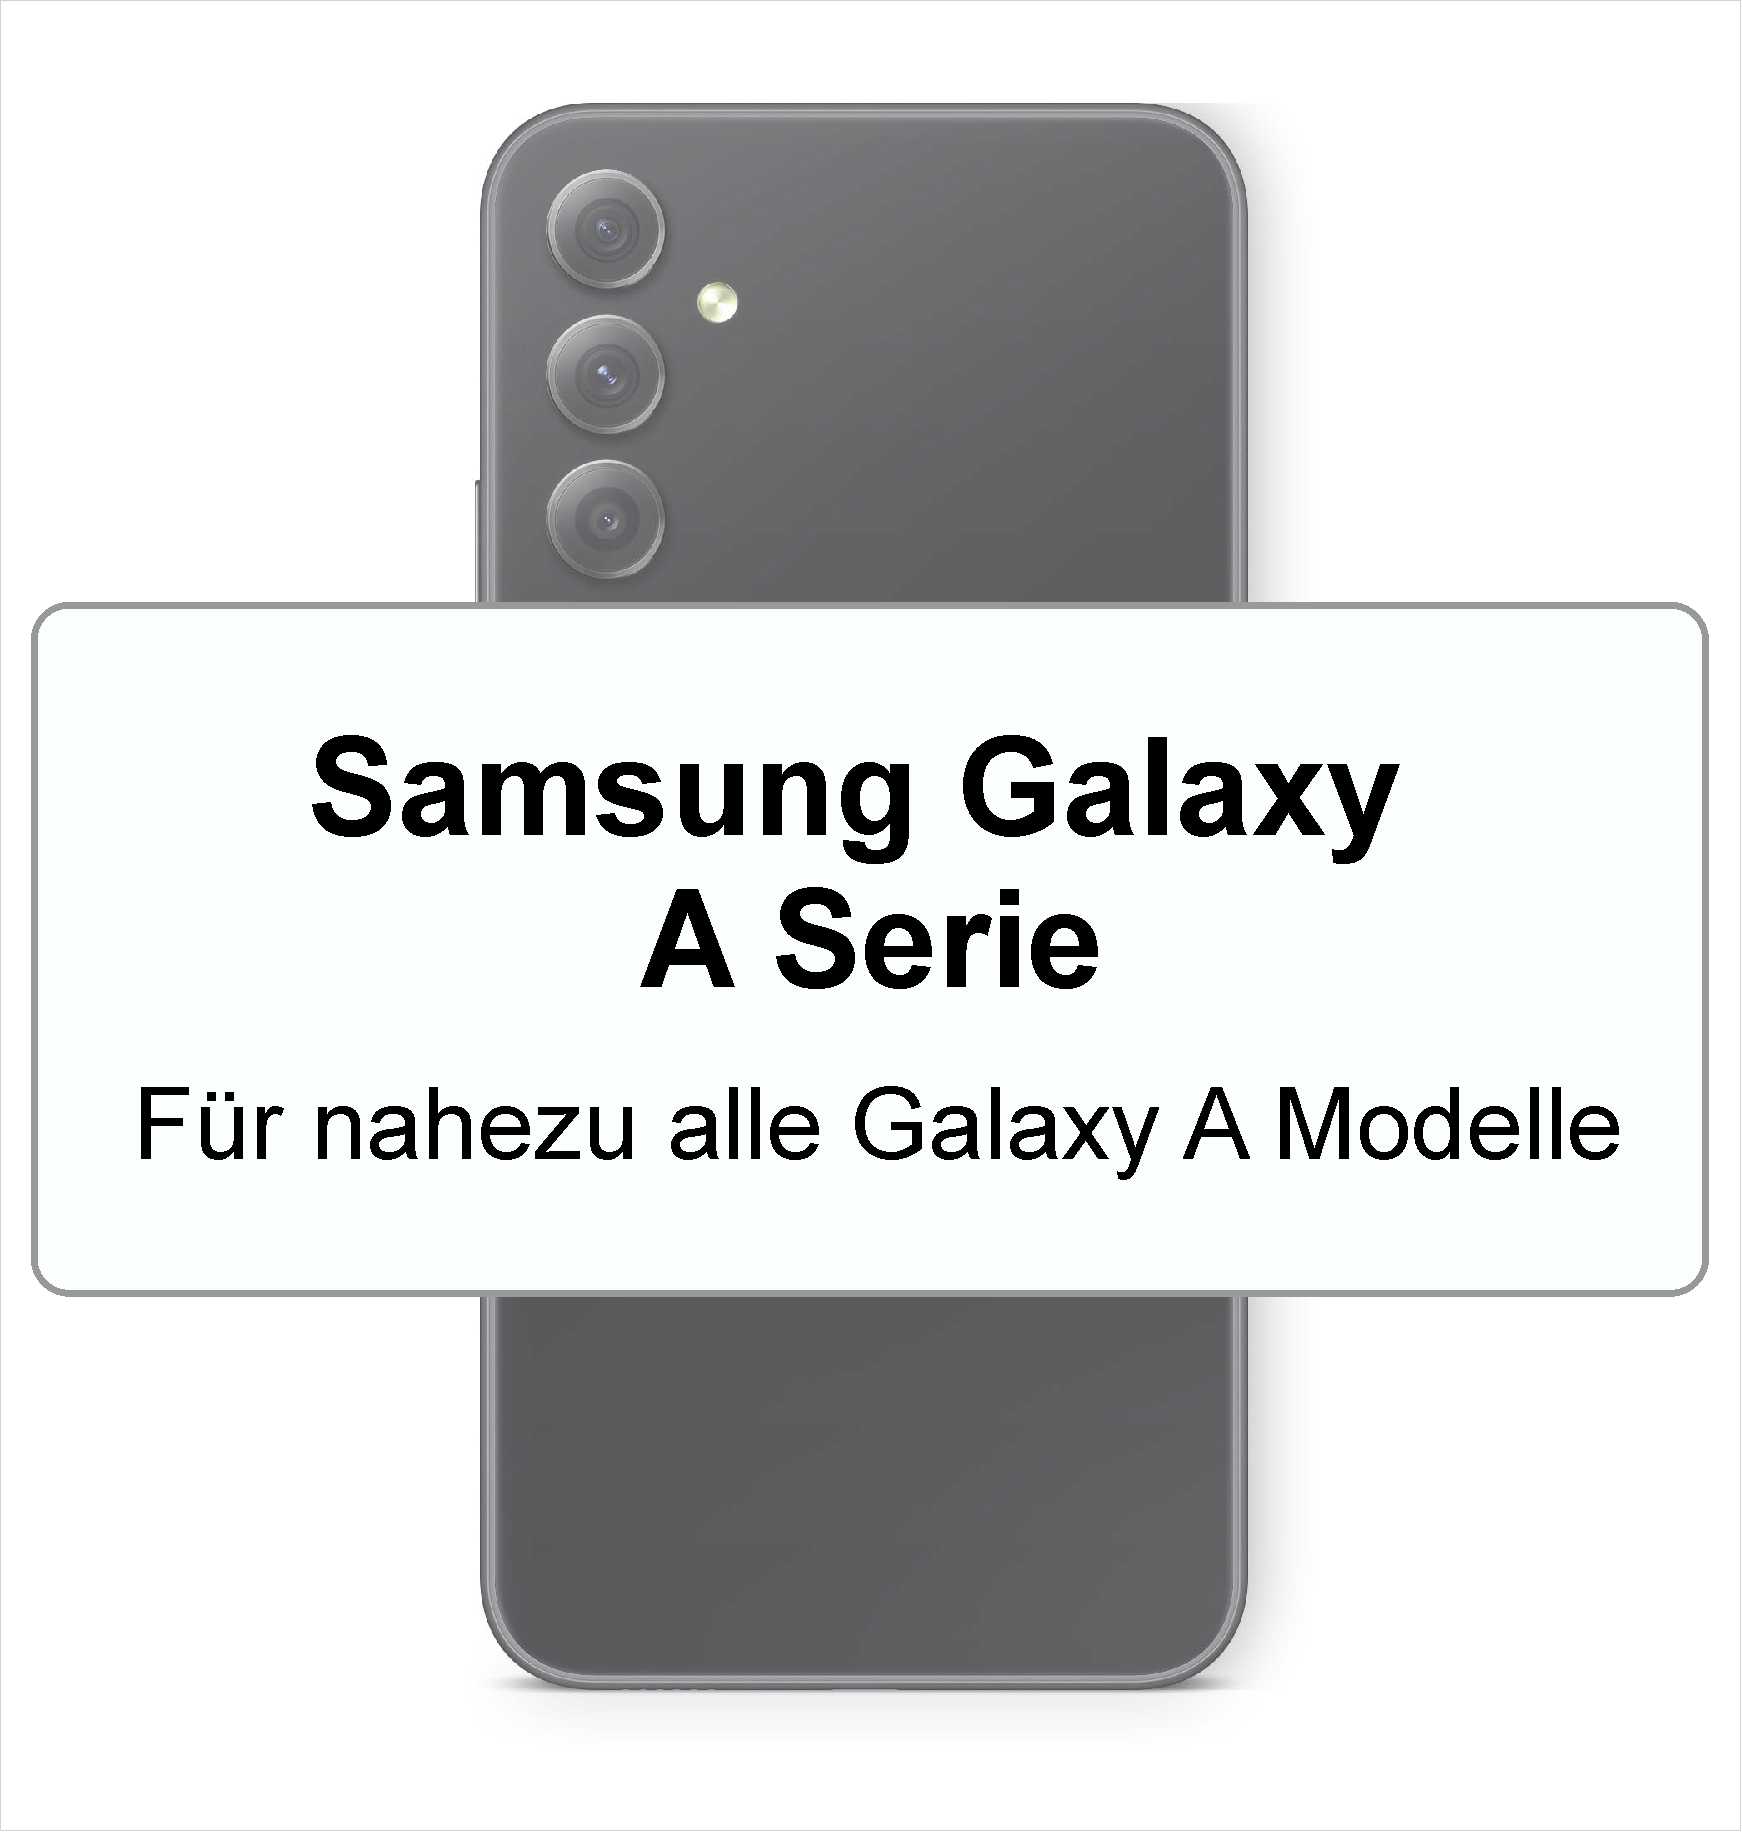 Samsung - Handy Folien-Skin - Europa-Park Onlineshop